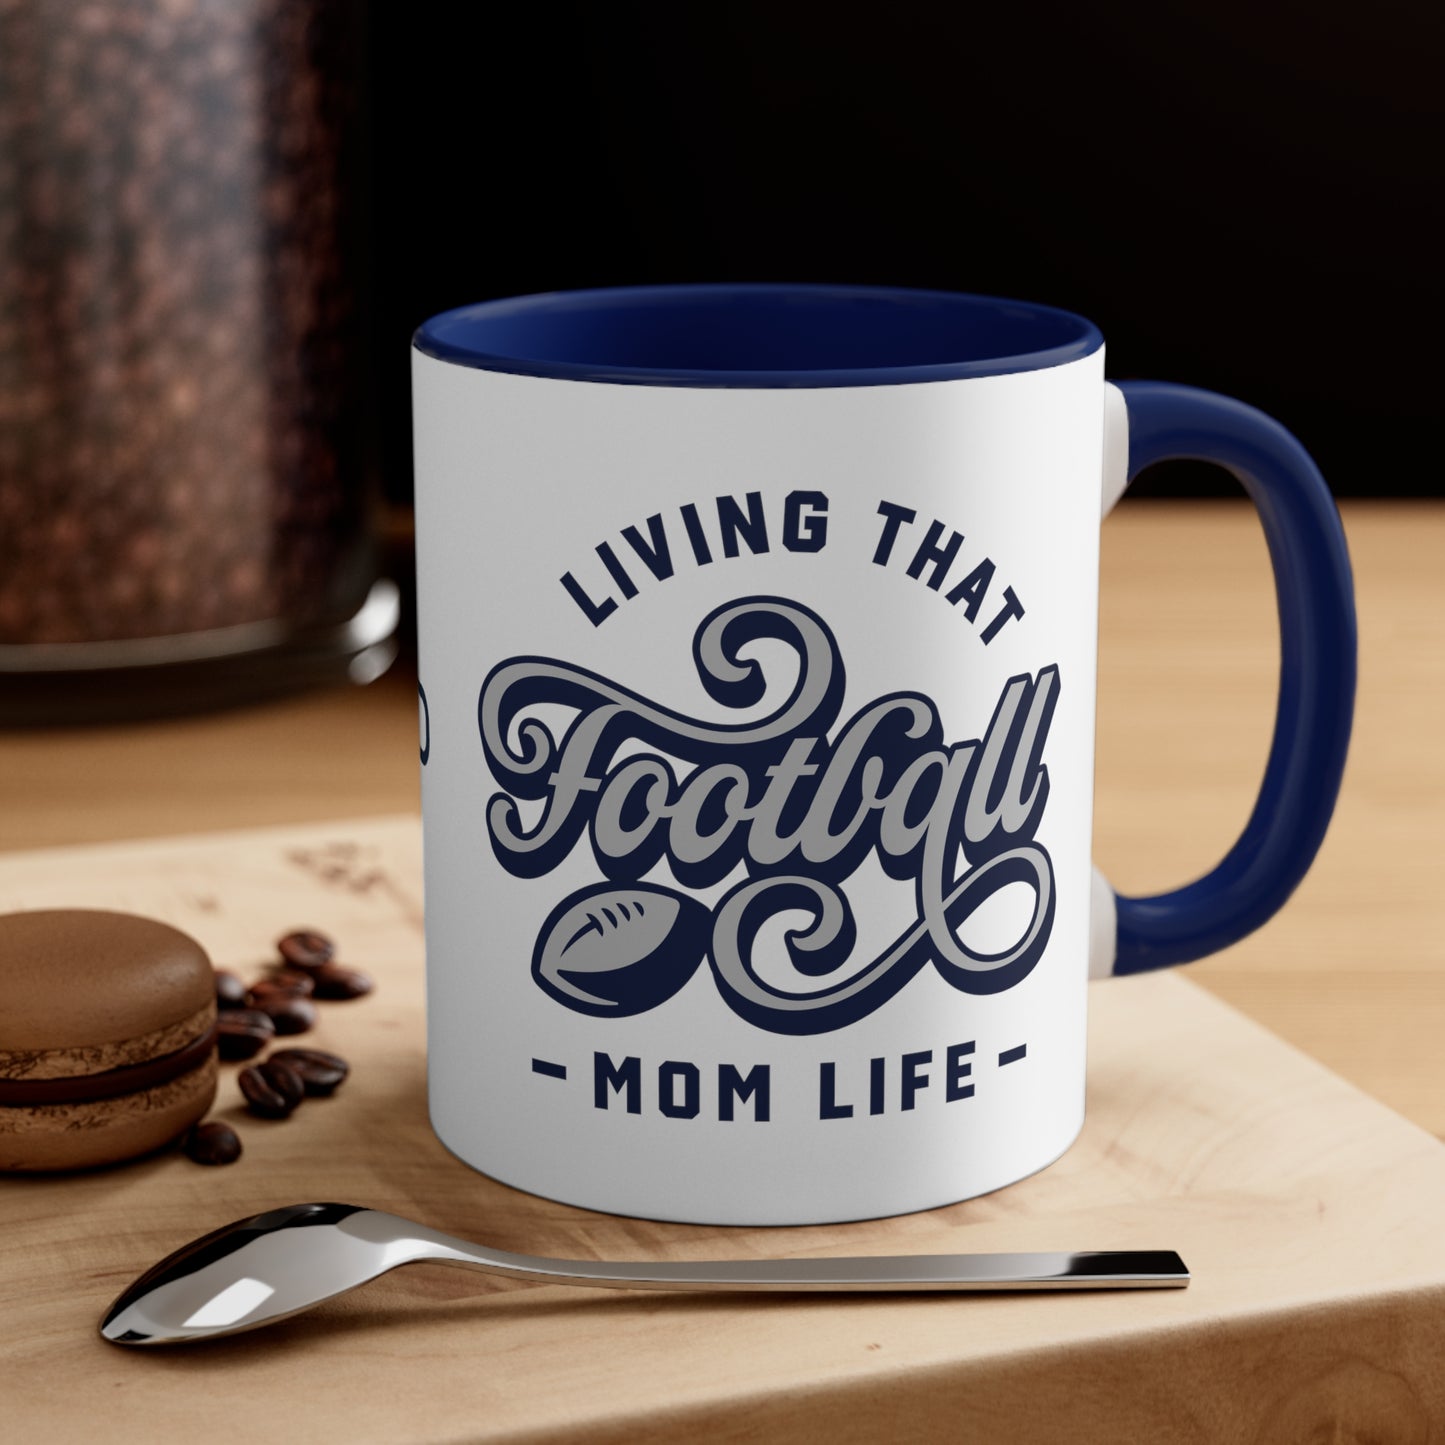 Personalized Living That Football Mom Life (11oz.)